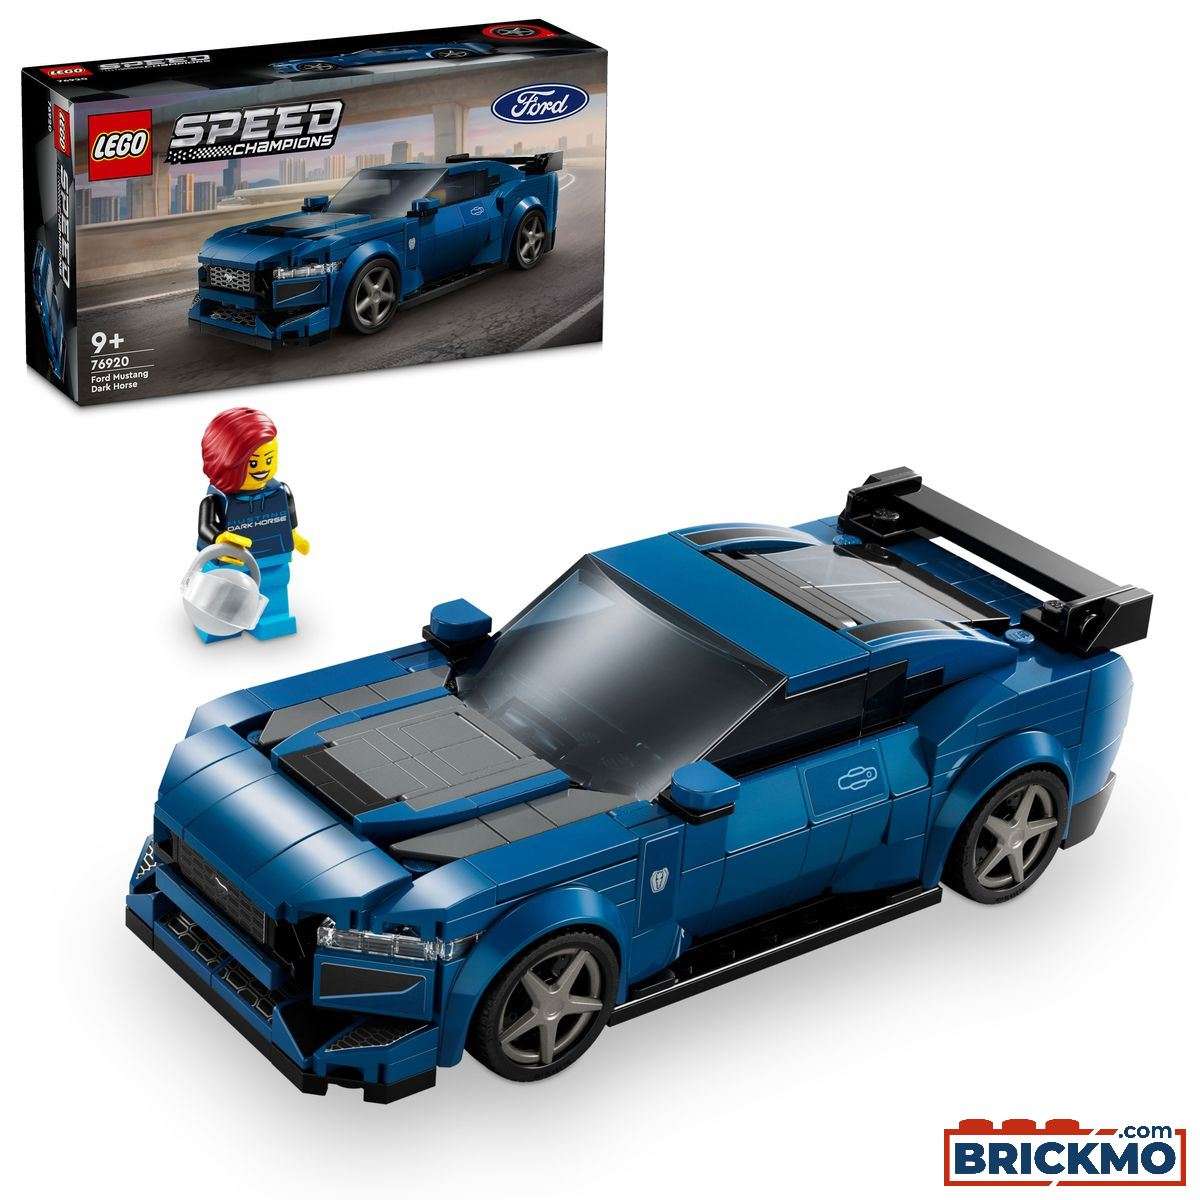 LEGO Speed Champions 76920 La voiture de sport Ford Mustang Dark Horse 76920